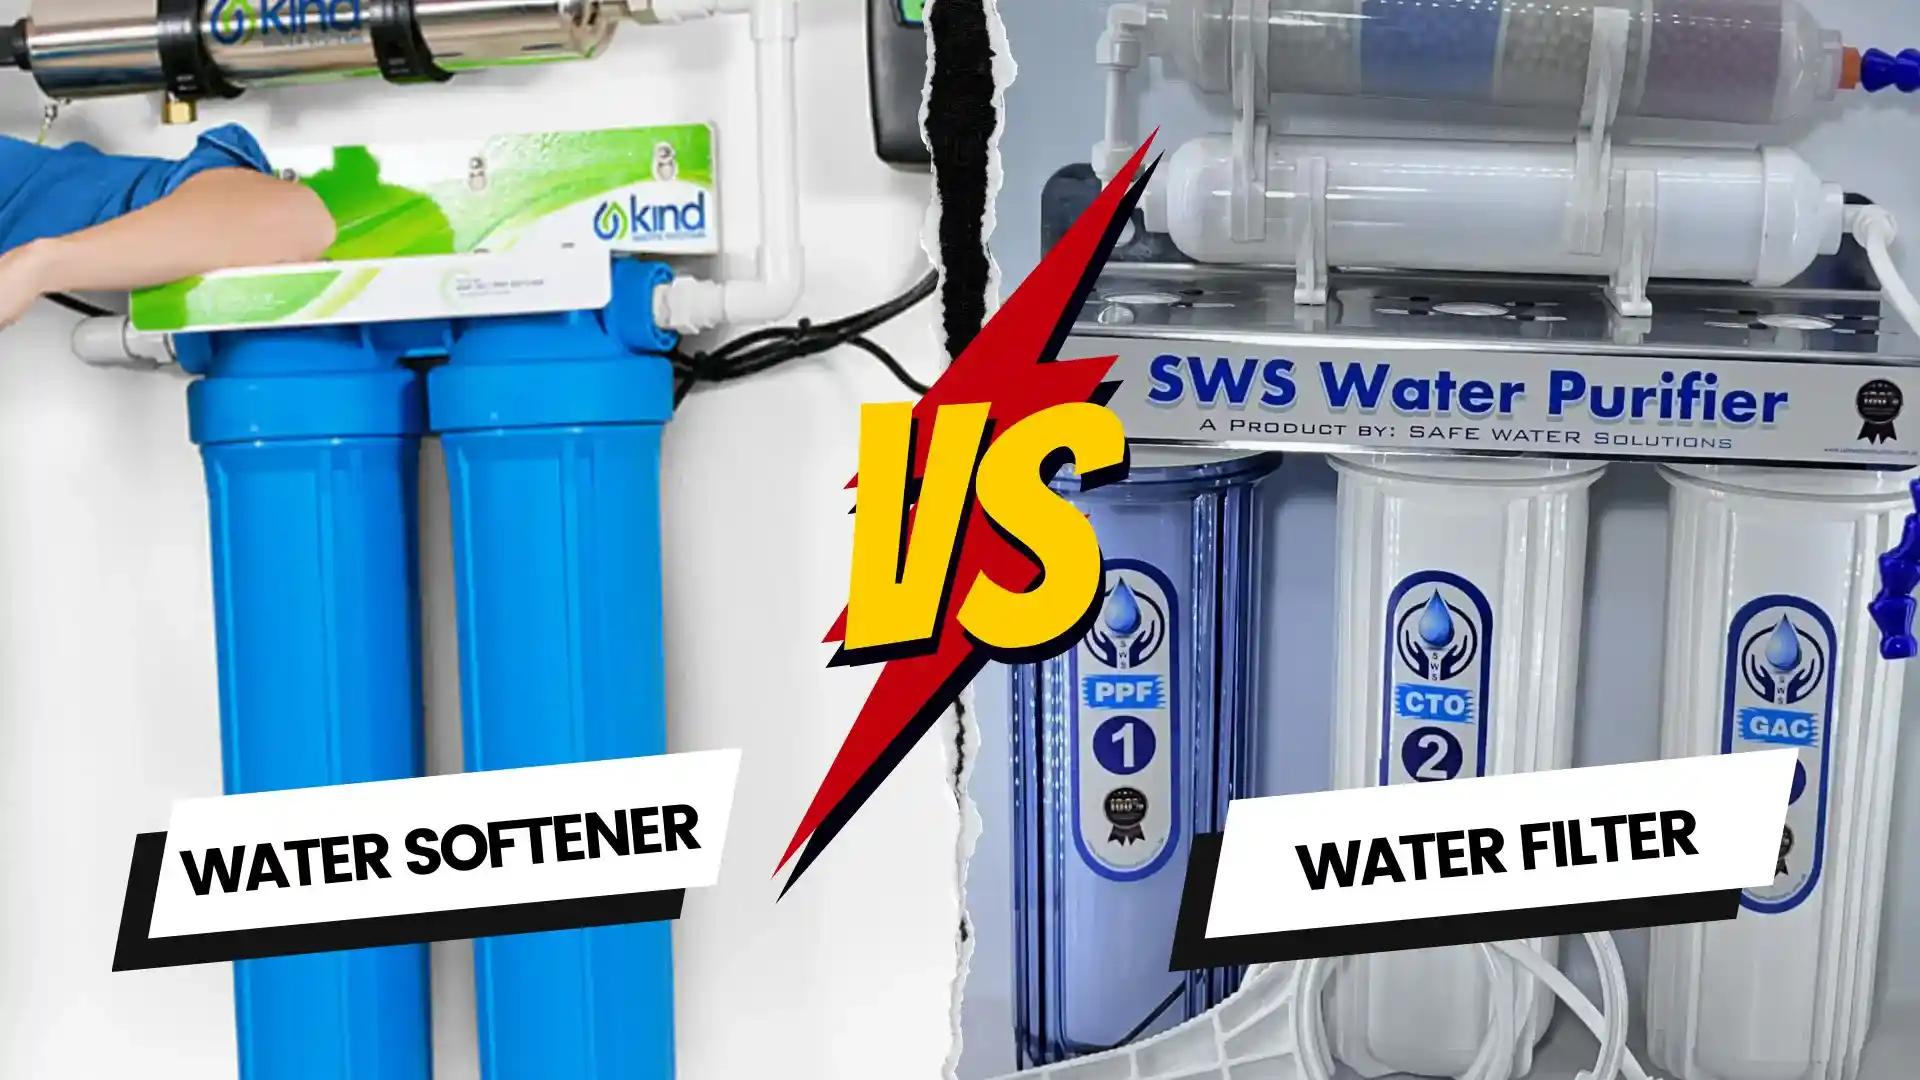 Water Softener vs Water Filter